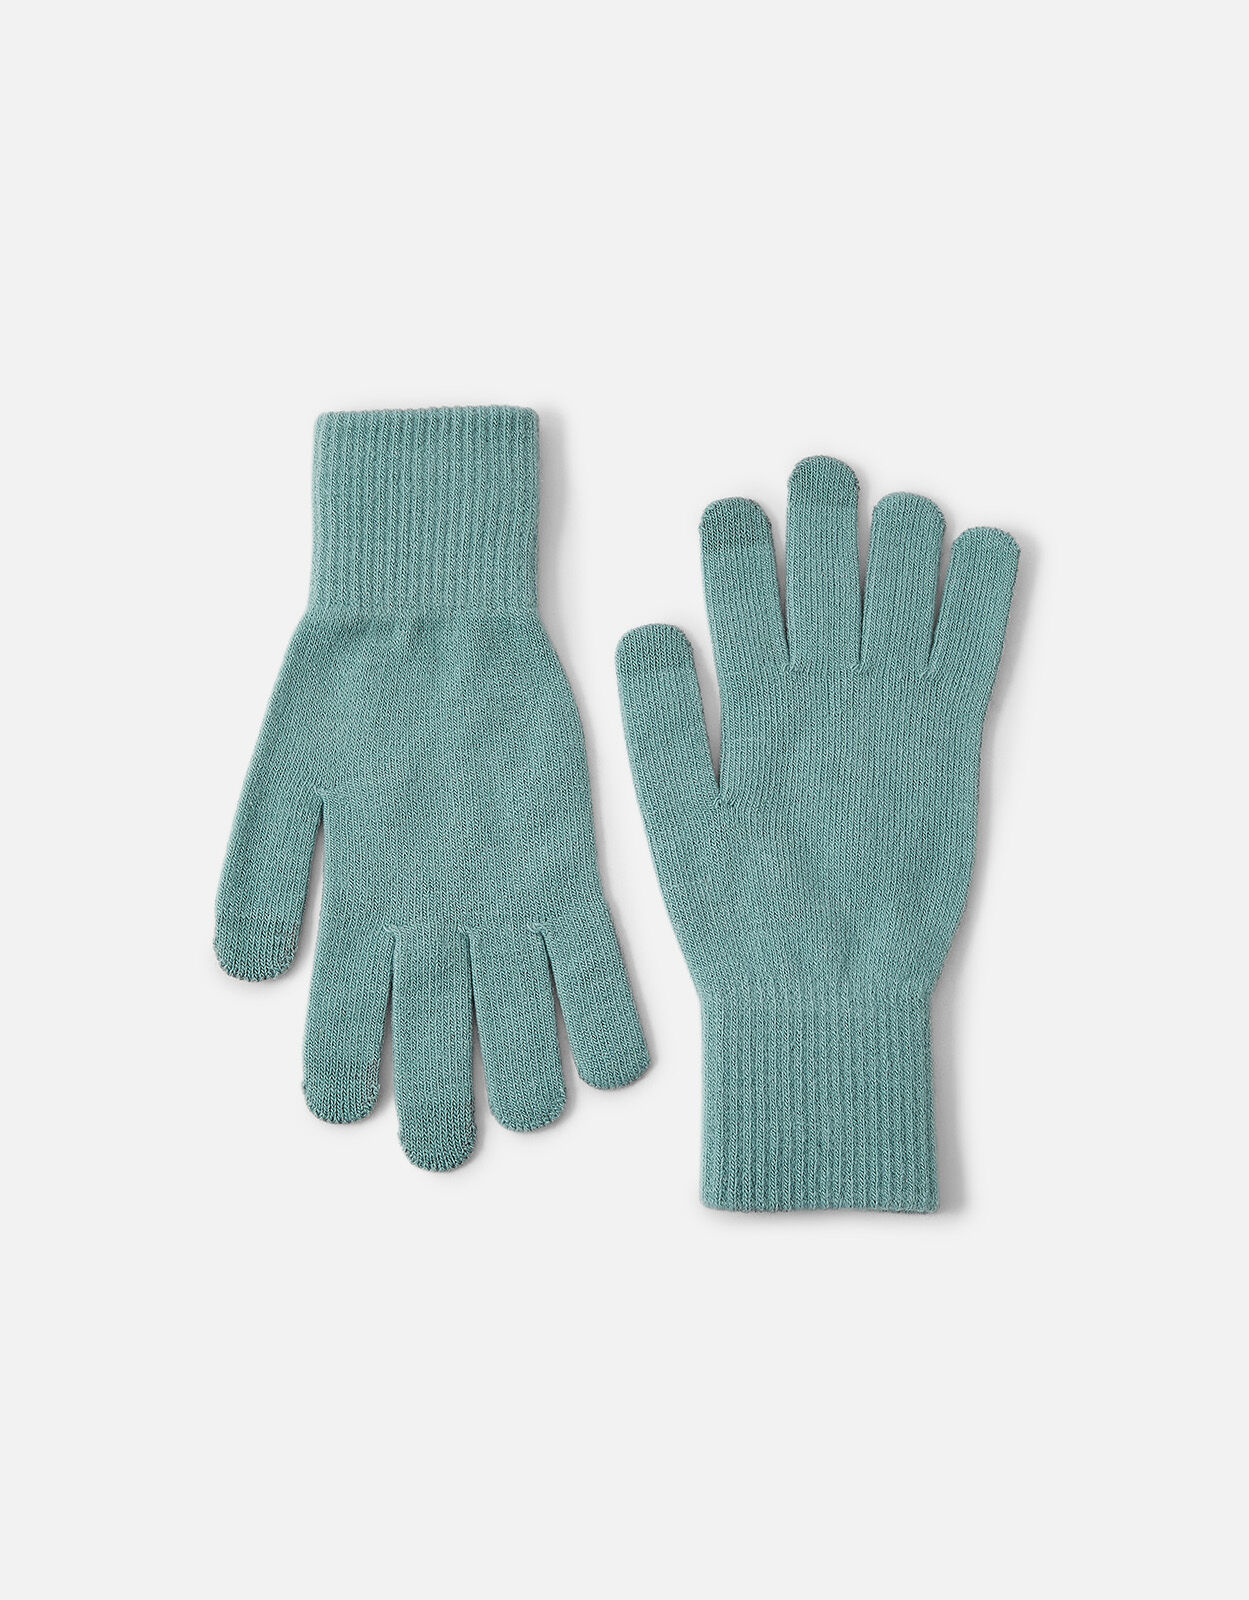 Scandinavian pattern wool gloves woman winter gloves ornamental gloves wool gloves retro gloves Accessories Gloves & Mittens Winter Gloves Gray and navy blue twin gloves 